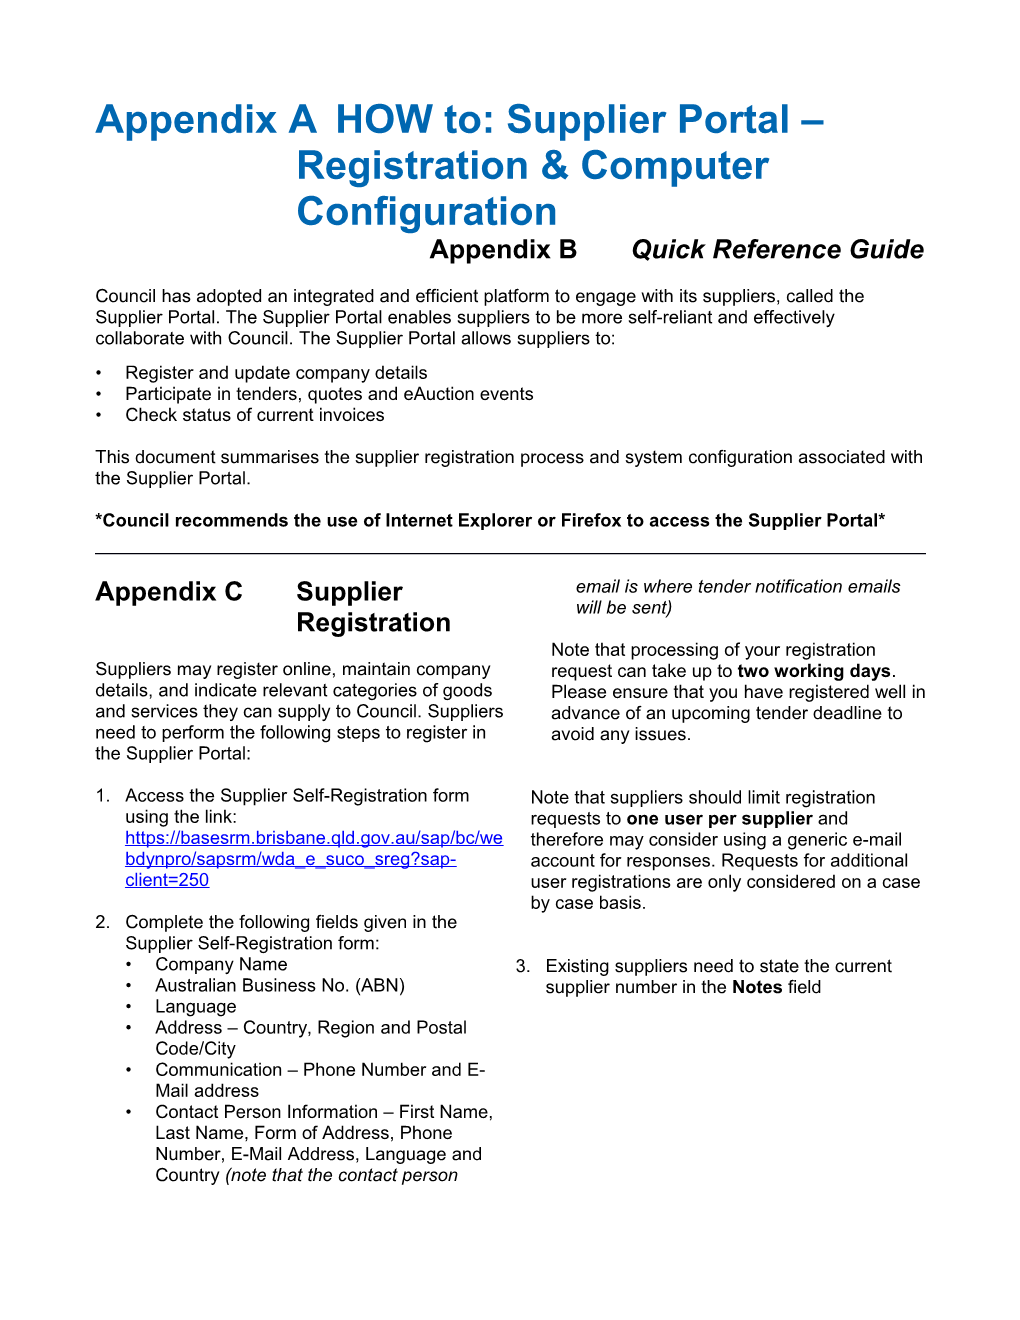 HOW To: Supplier Portal Registration & Computer Configuration